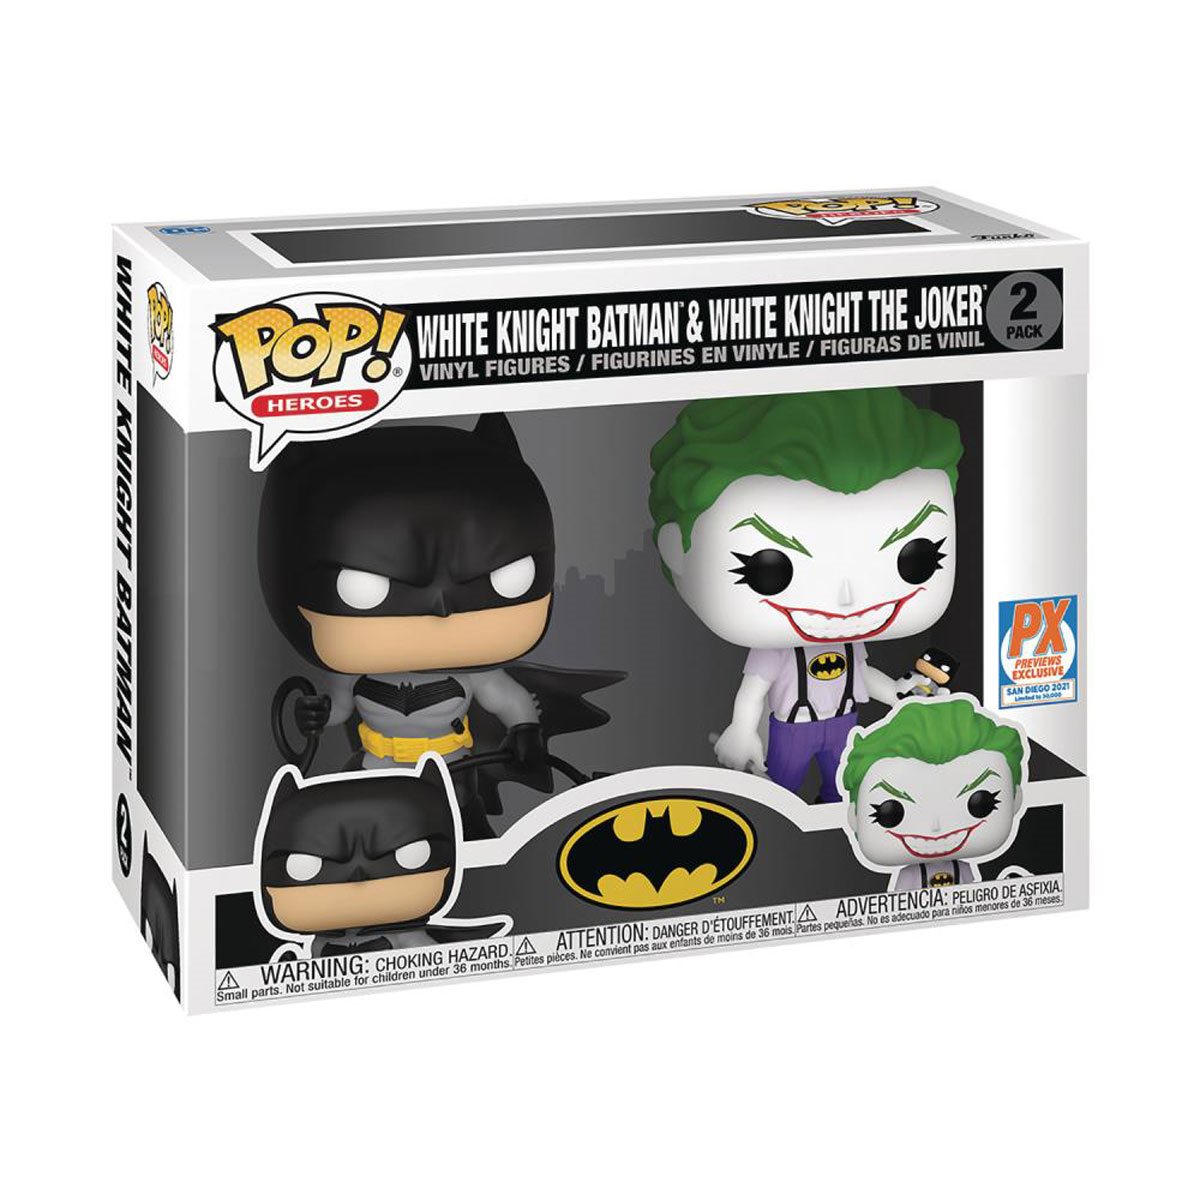 The Joker 10-Inch POP Vinyl Figure #334 Funko The Dark Knight Batman New!